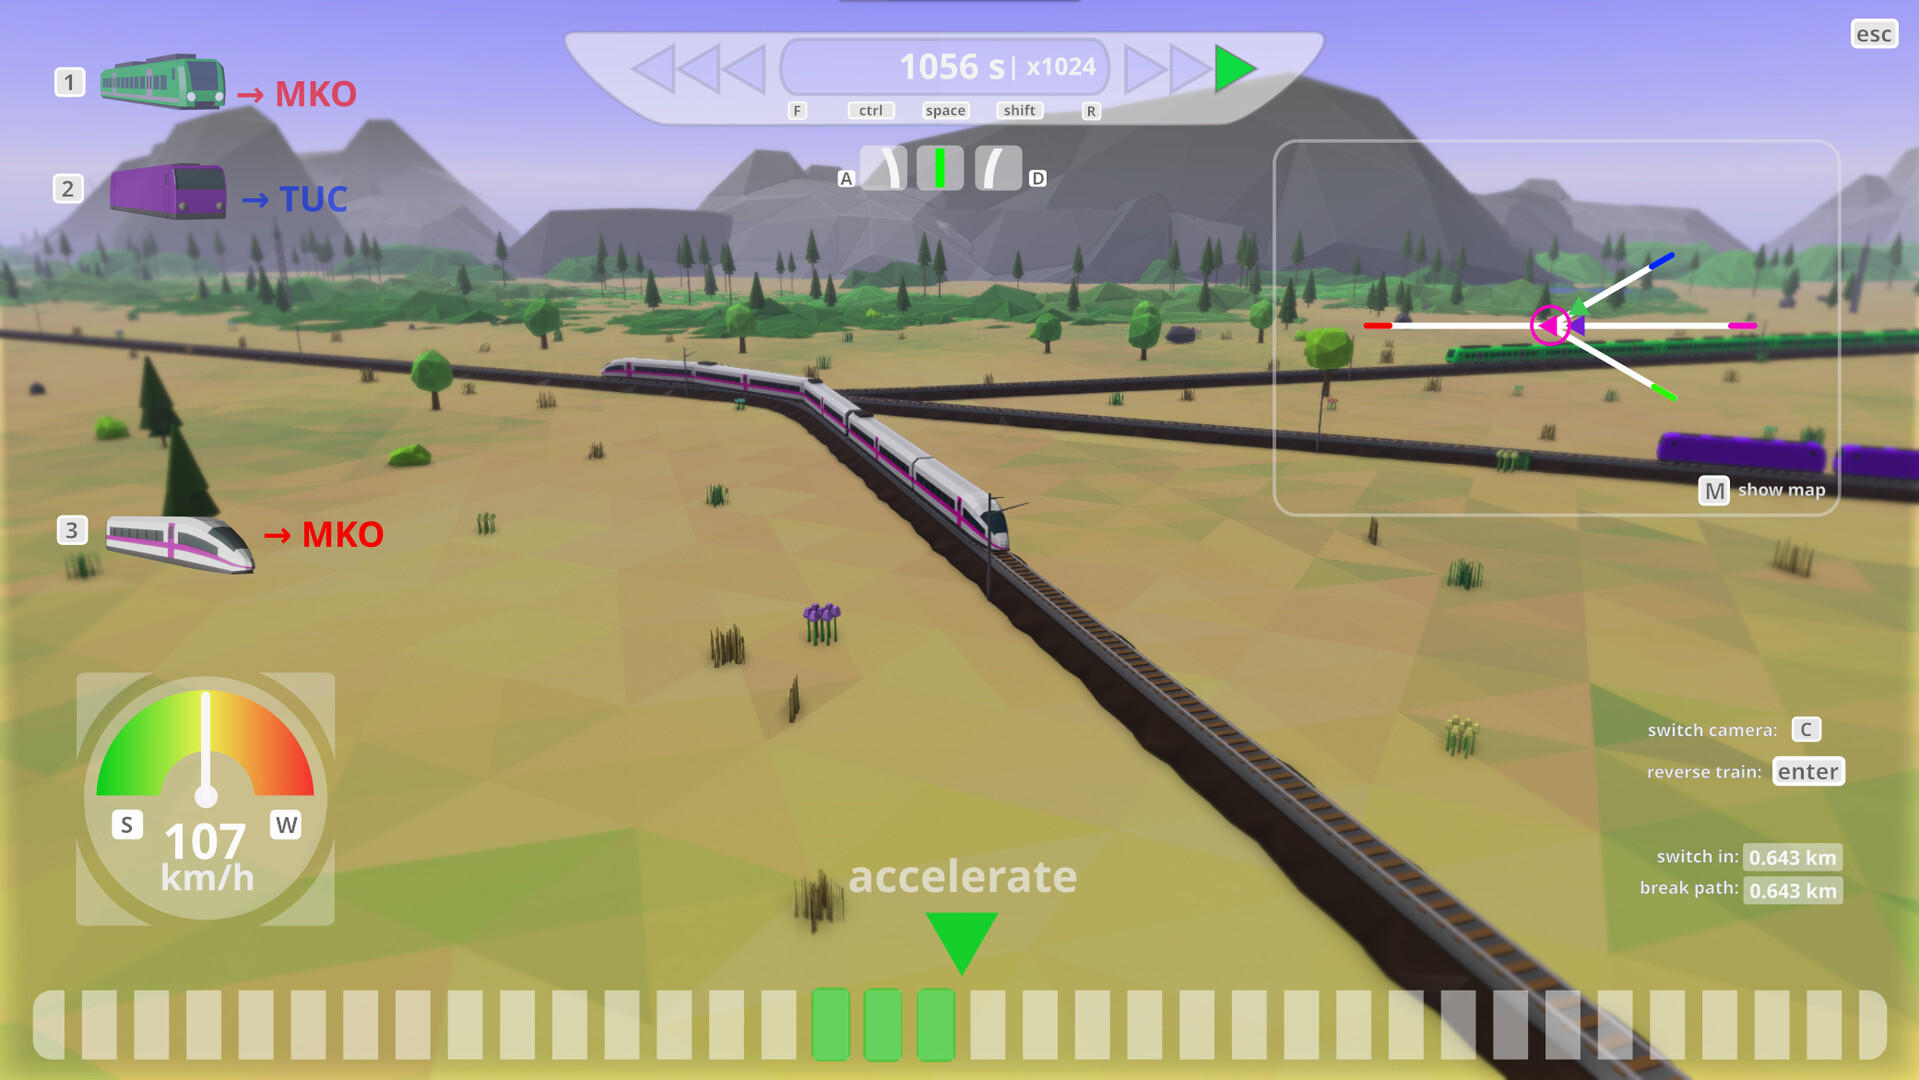 Screenshot 1 of Planificateur de chemin de fer 